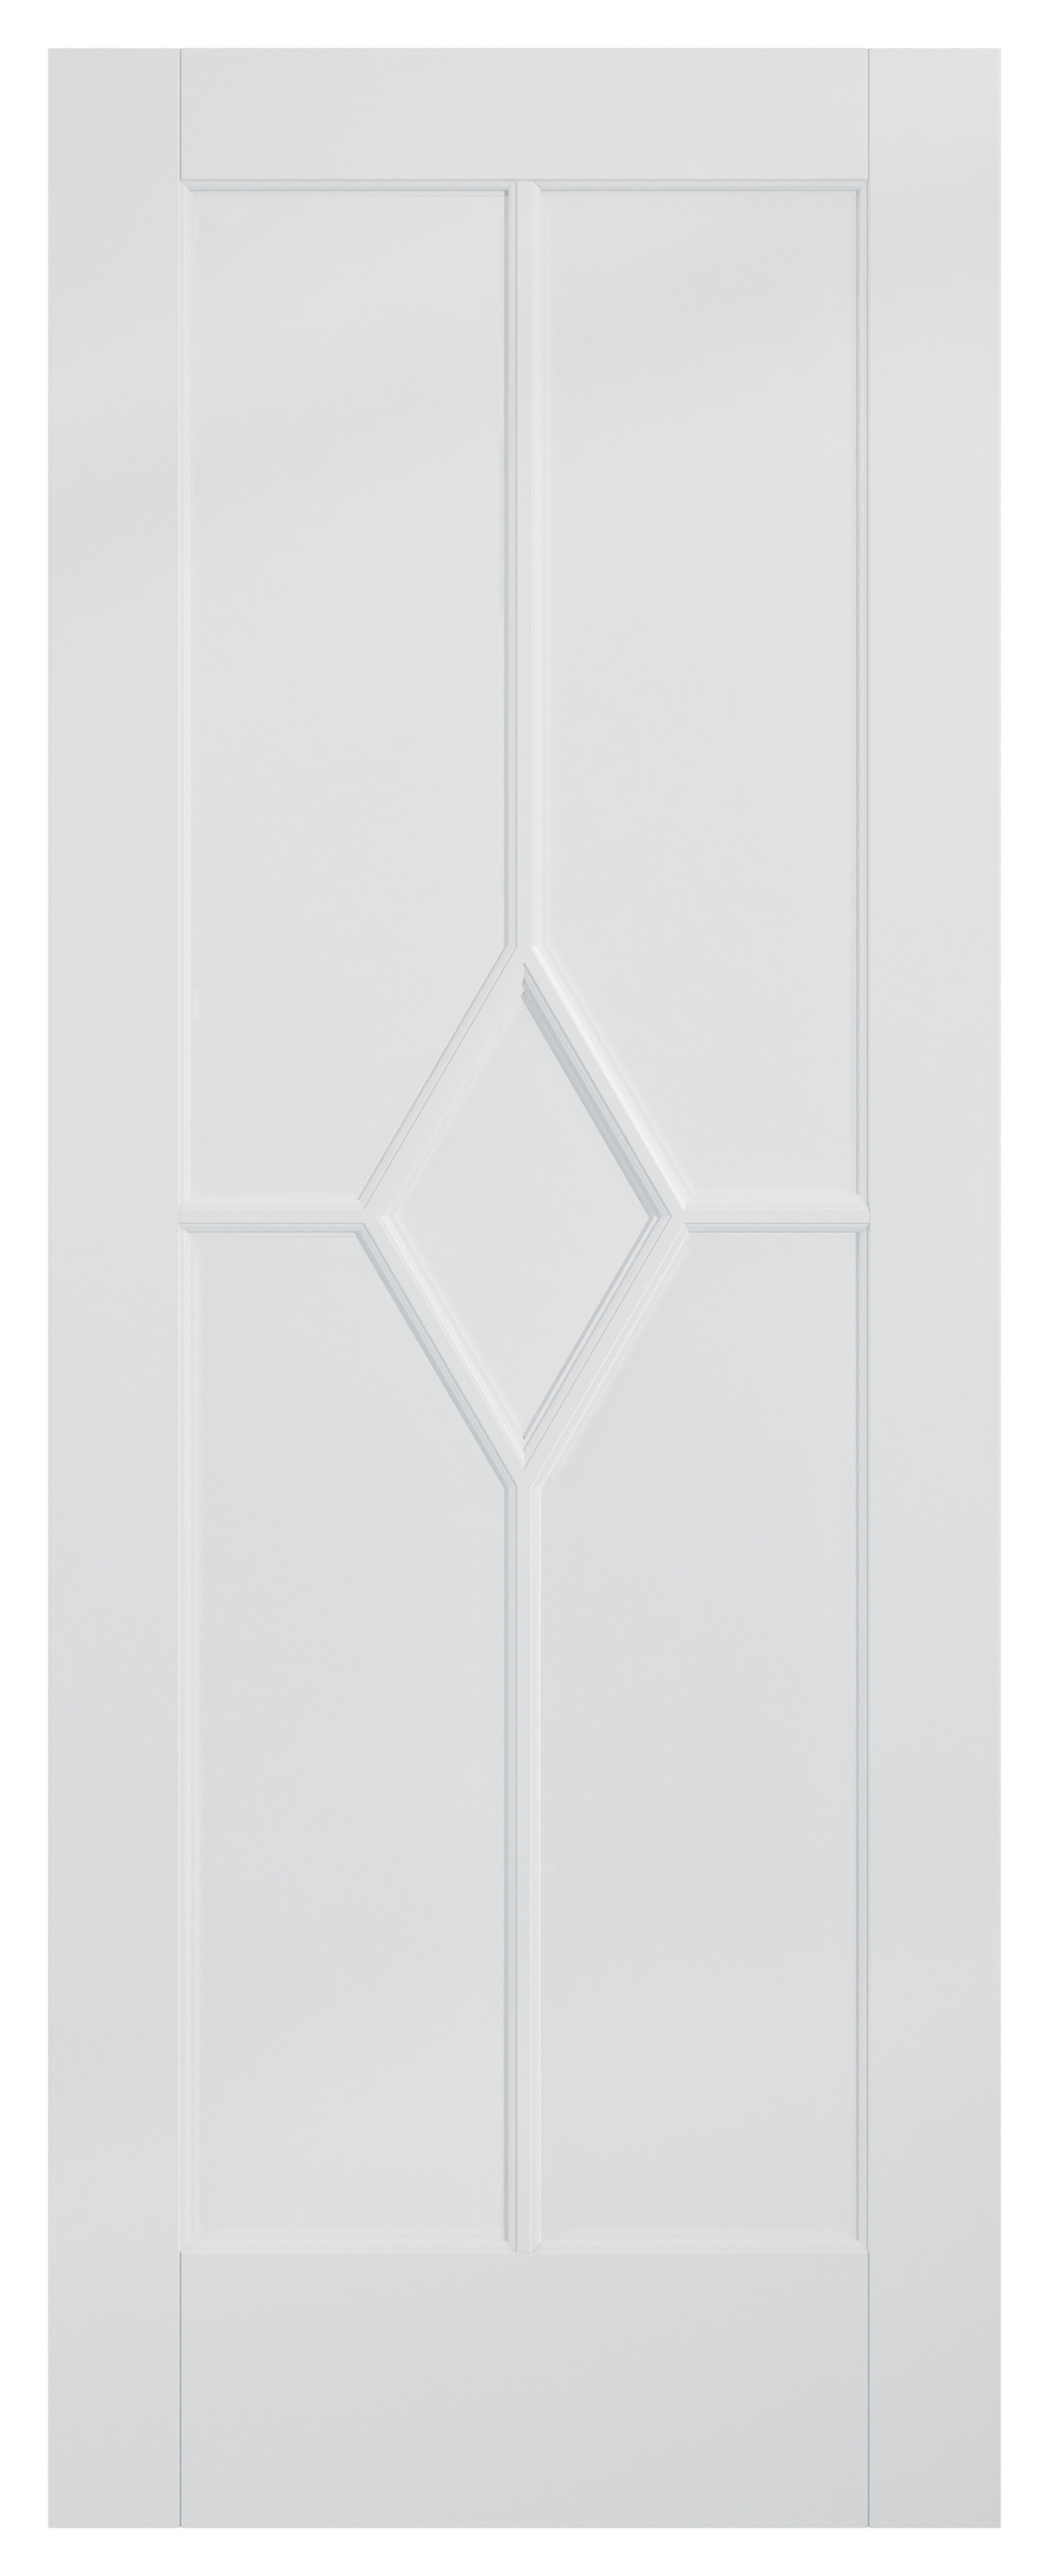 Image of LPD Internal Reims 5 Panel Primed White Solid Core Door - 838 x 1981mm